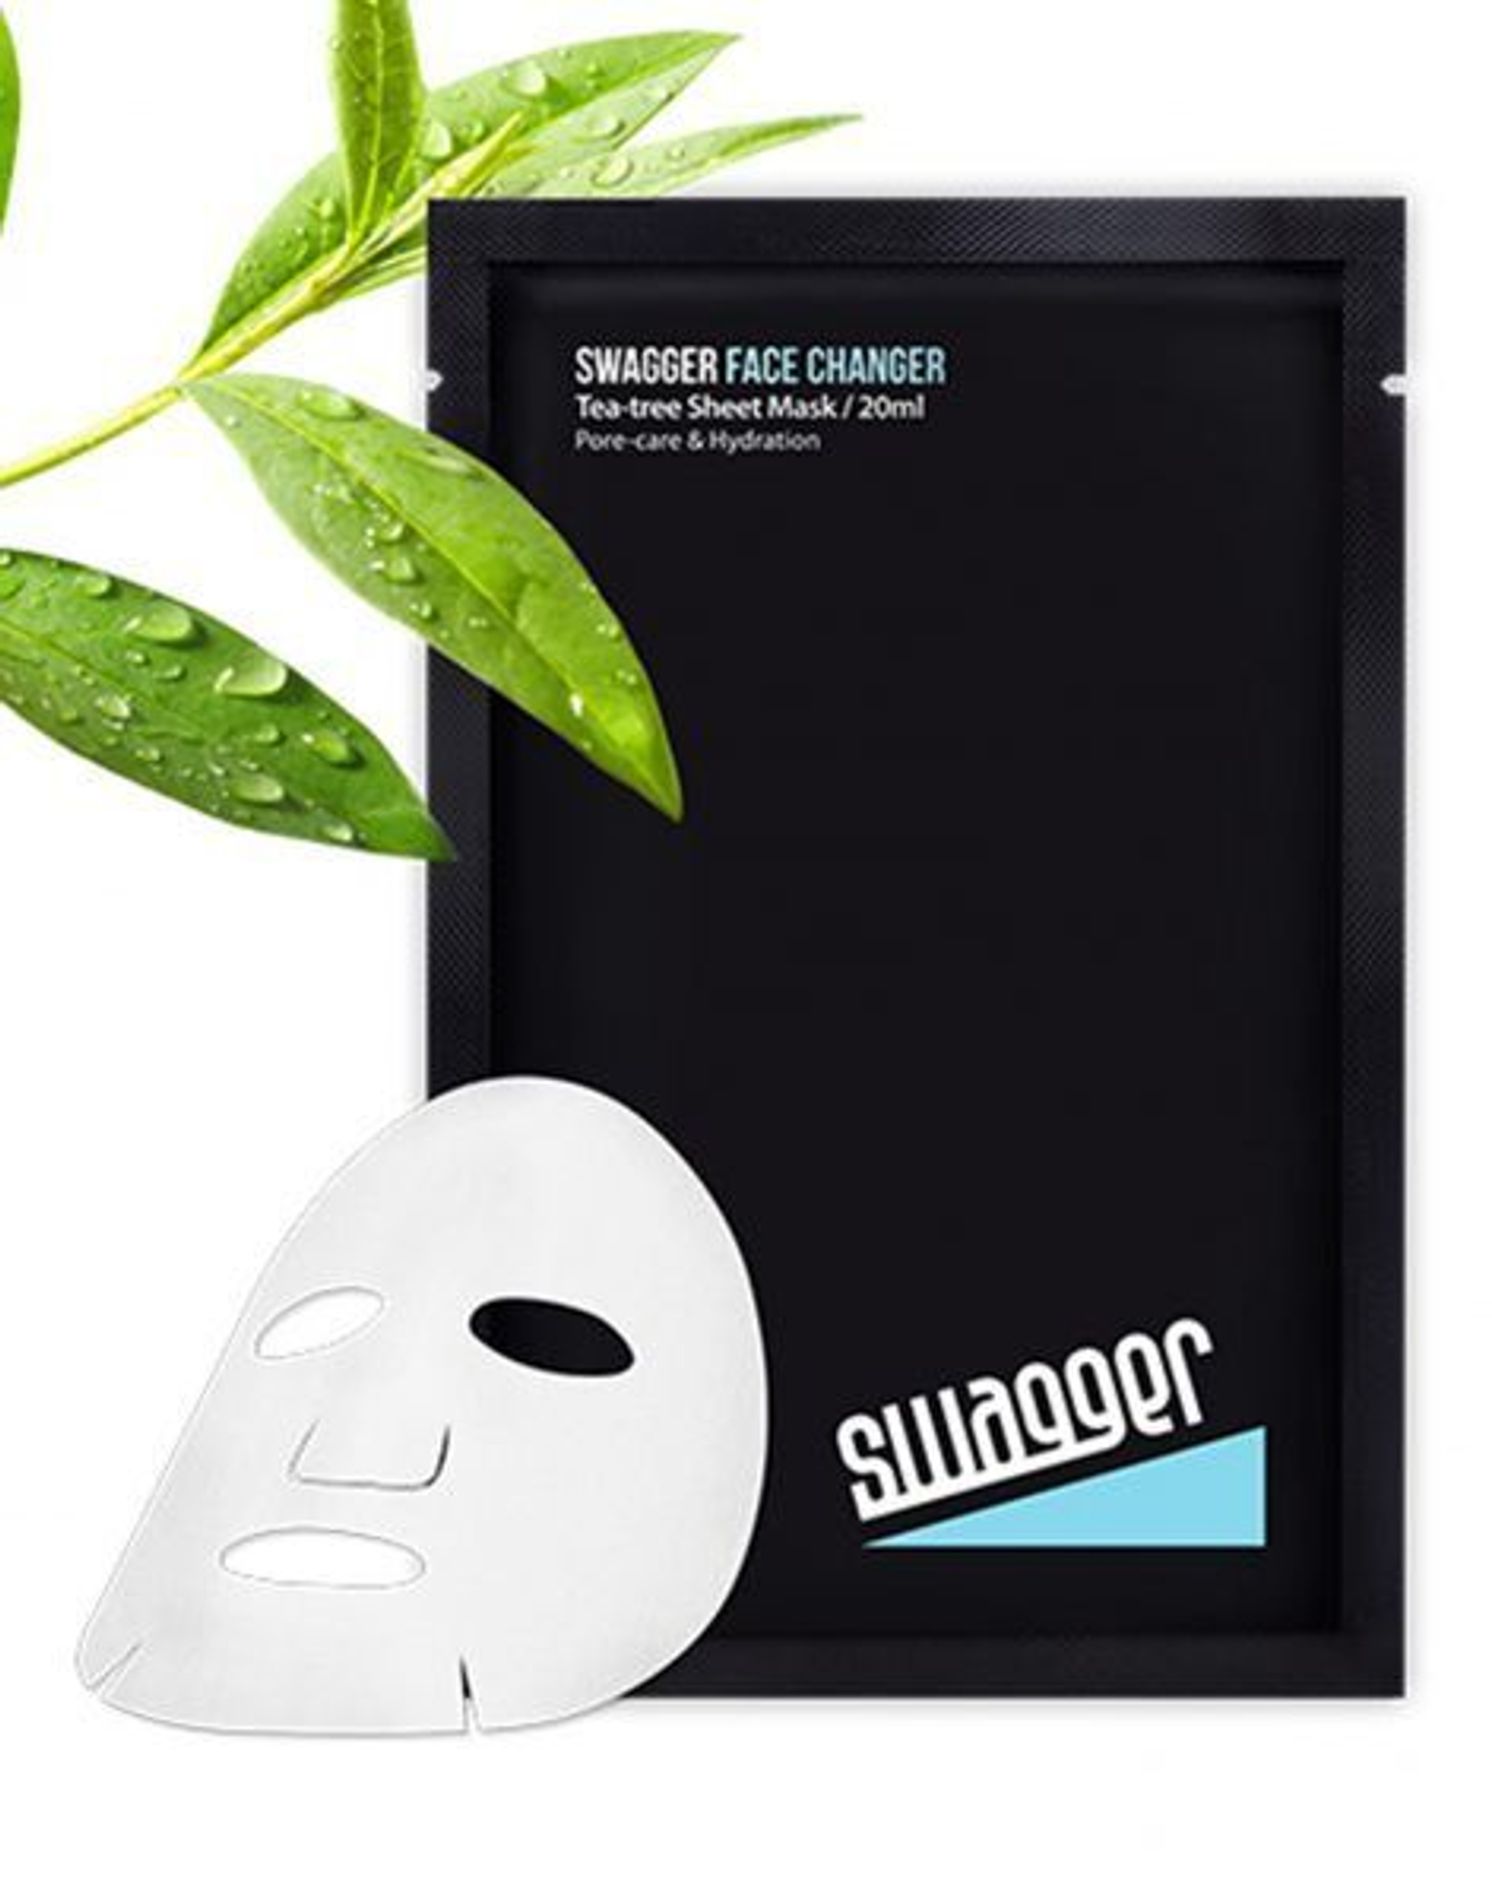 mat-na-giay-sheet-mask-swagger-face-changer-tea-tree-sheet-mask-20ml-4